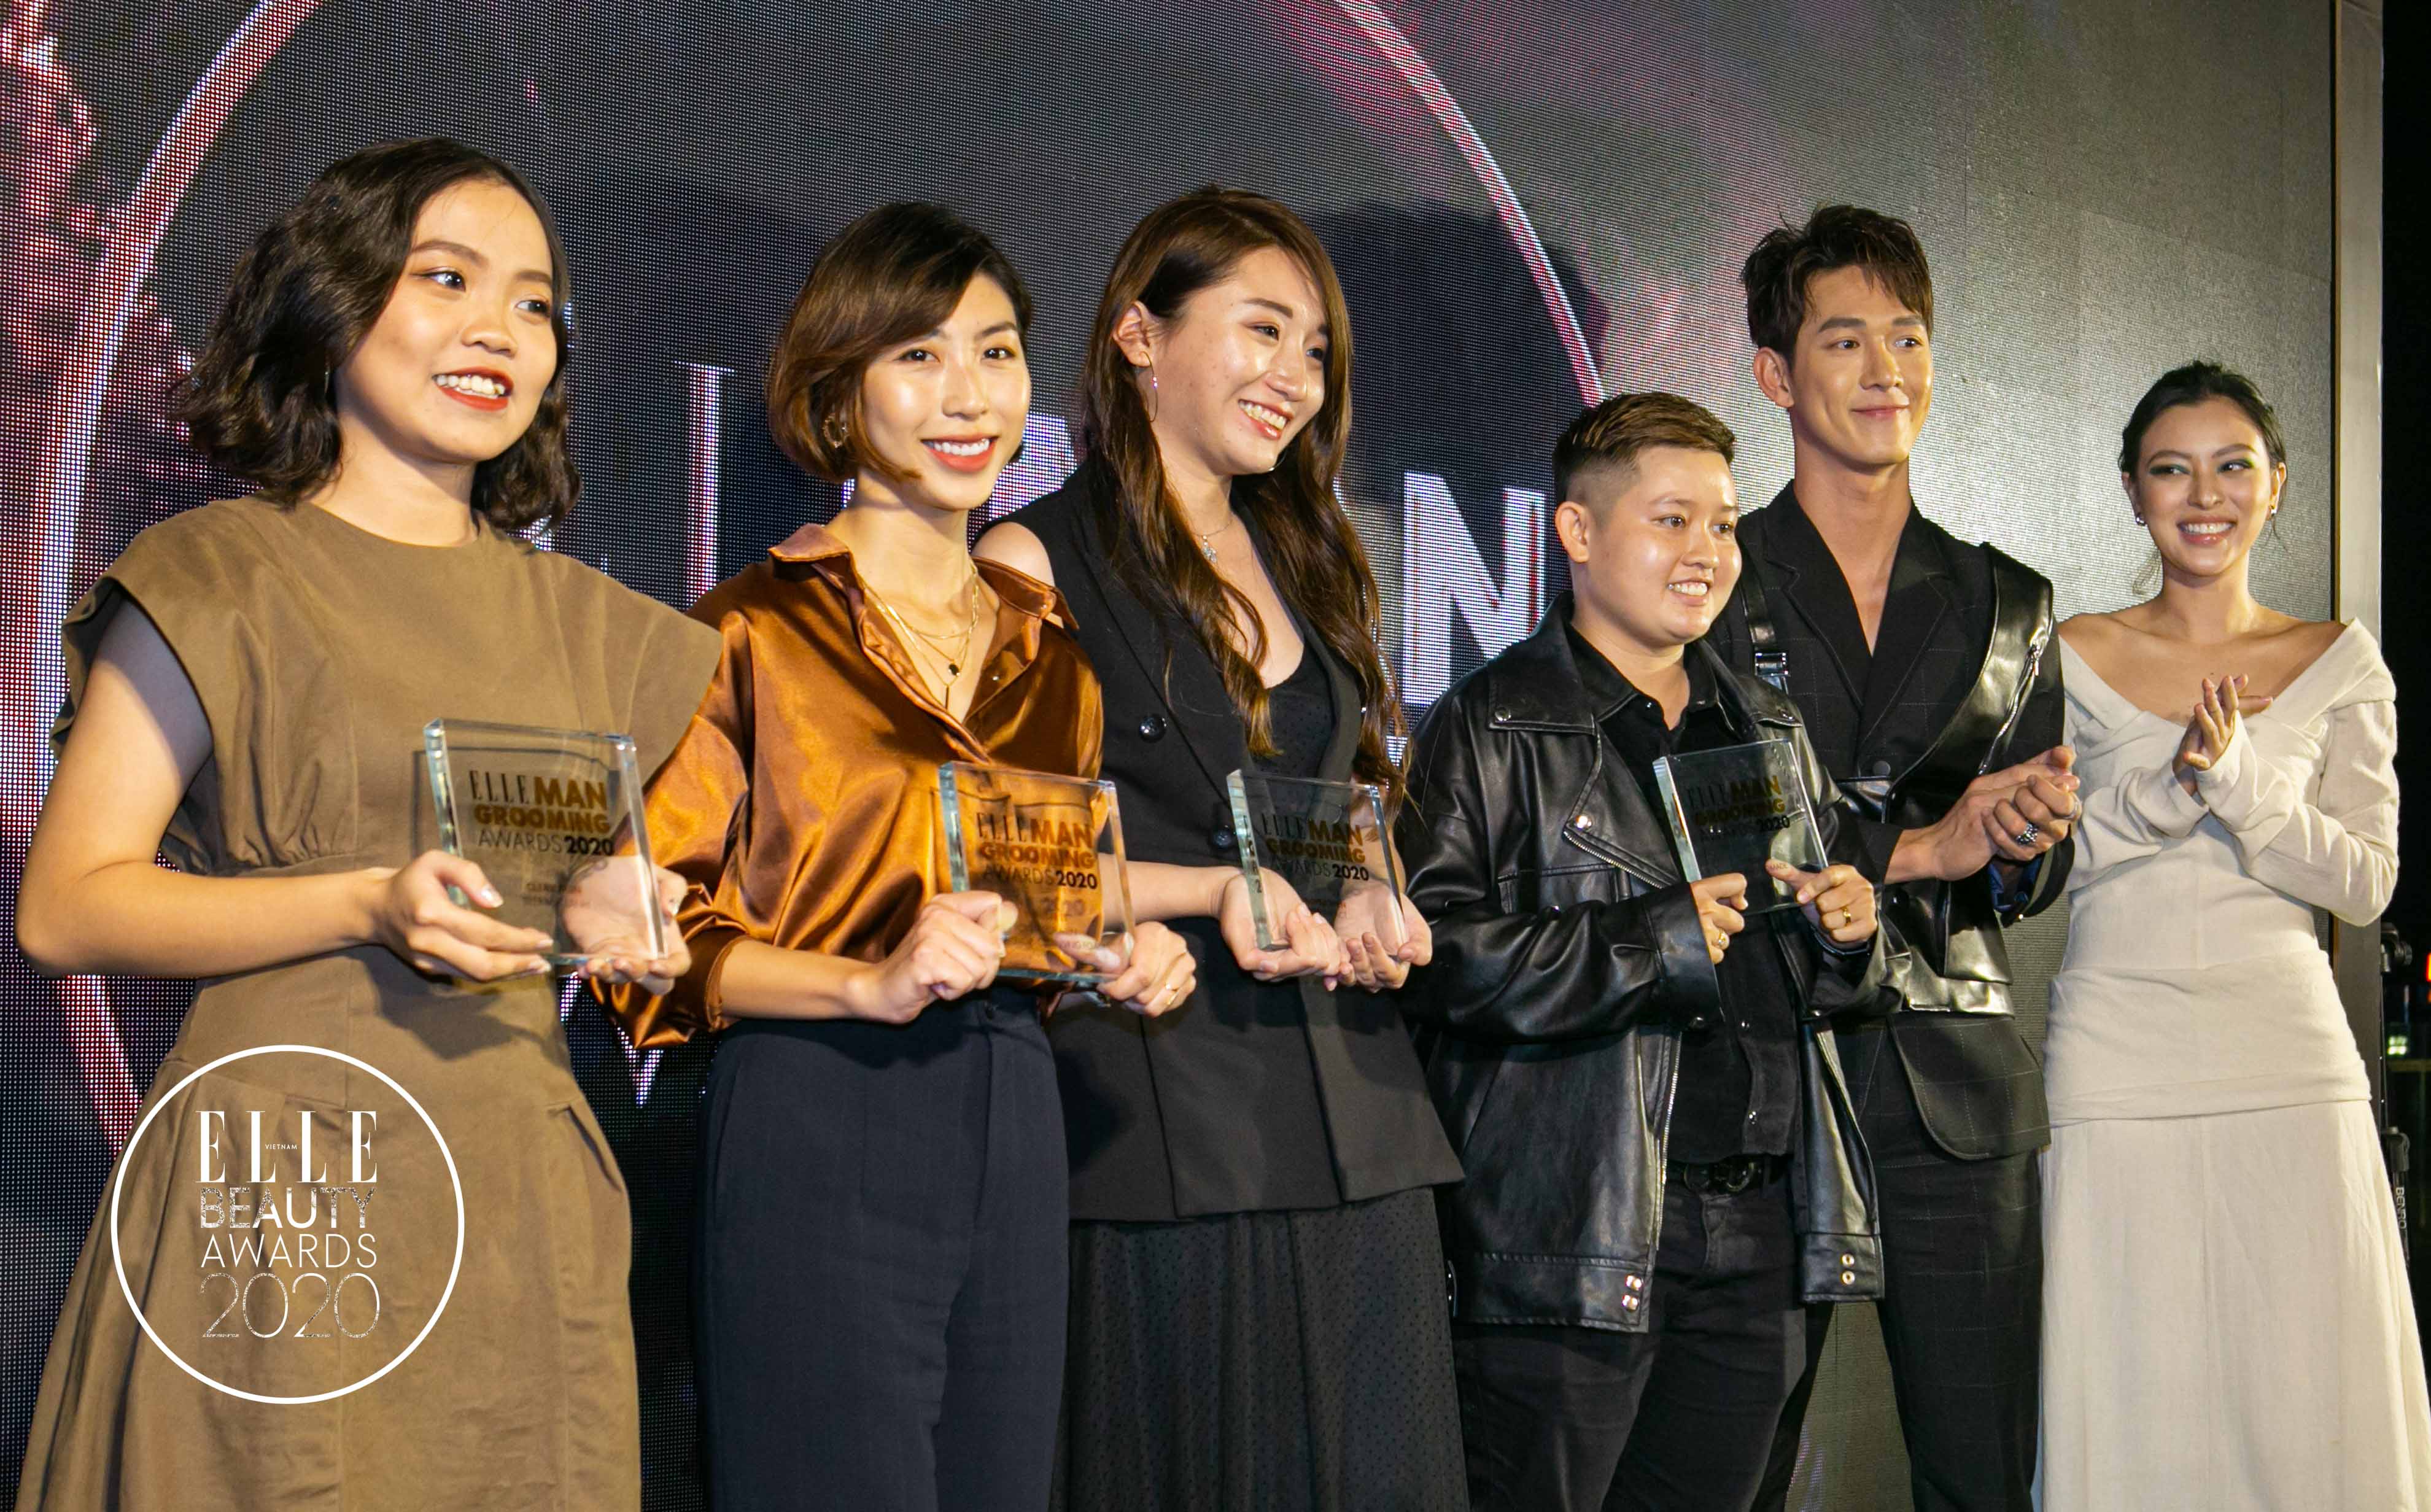 giai thuong elleman grooming awards-elle beauty awards 2020-elleman-1219